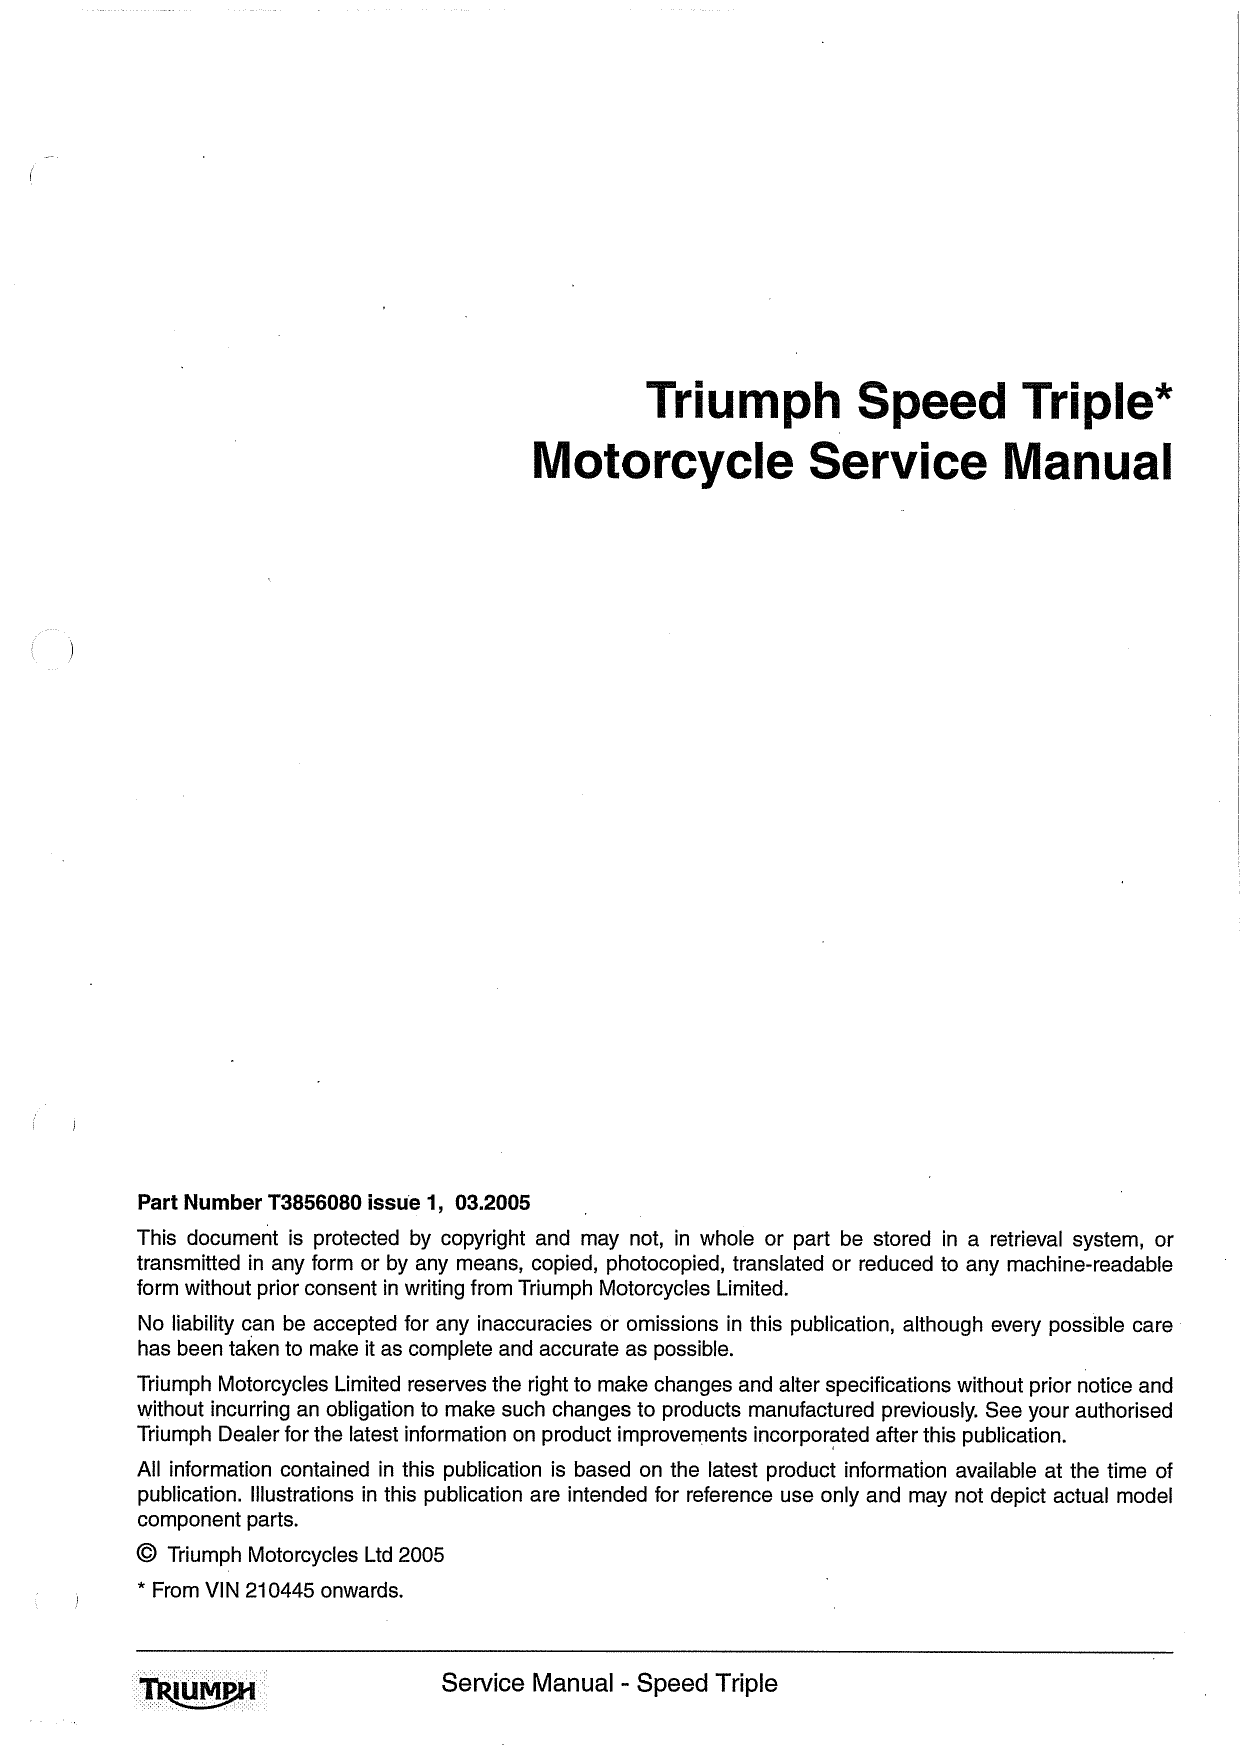 2005-2006 Triumph Speed Triple 1050 service, repair manual Preview image 1